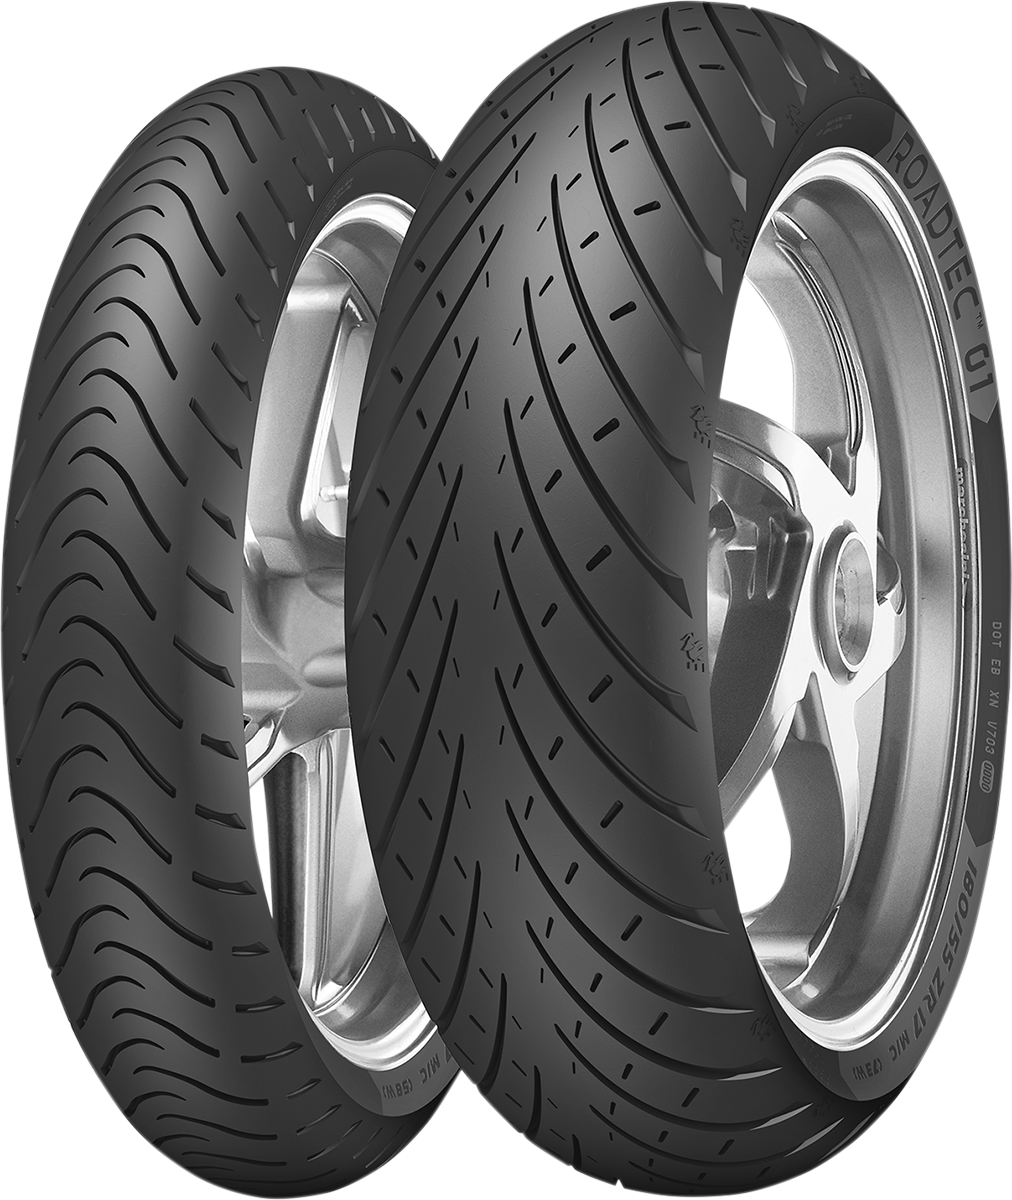 METZELER Tire - Roadtec* 01 - Front - 120/70ZR17 - (58W) 2681200